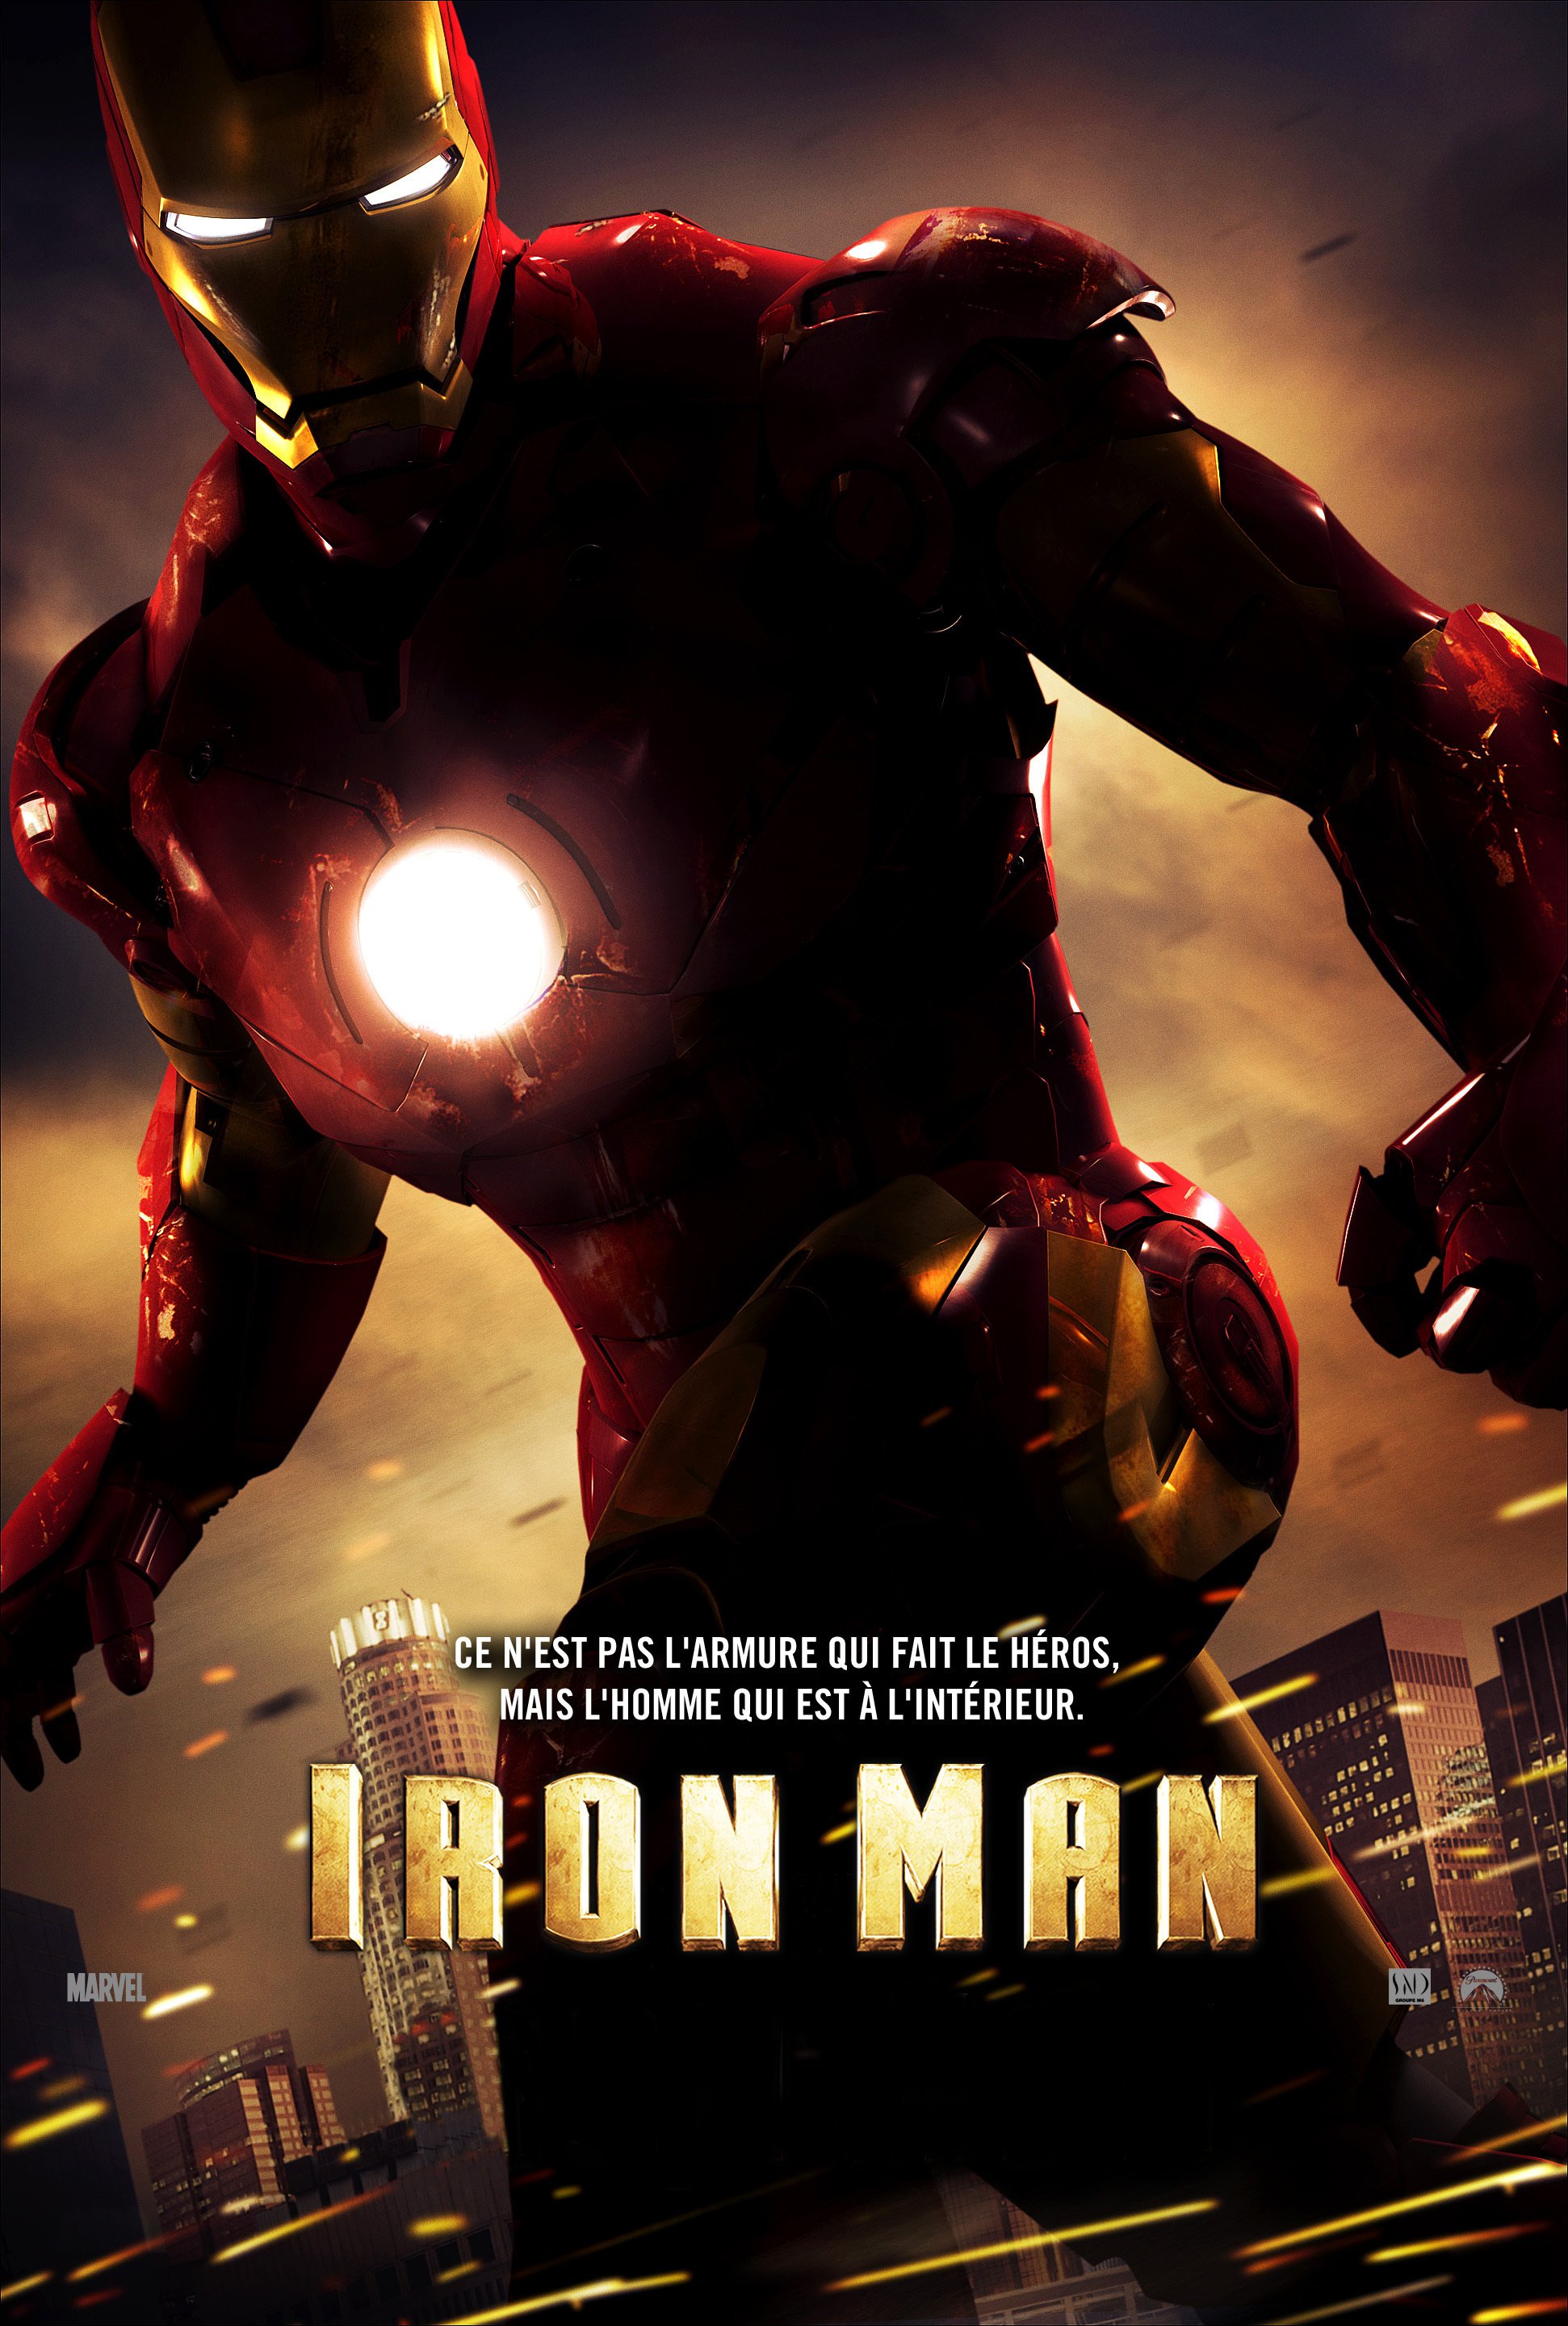 iron man 2008 full movie online free 123movies